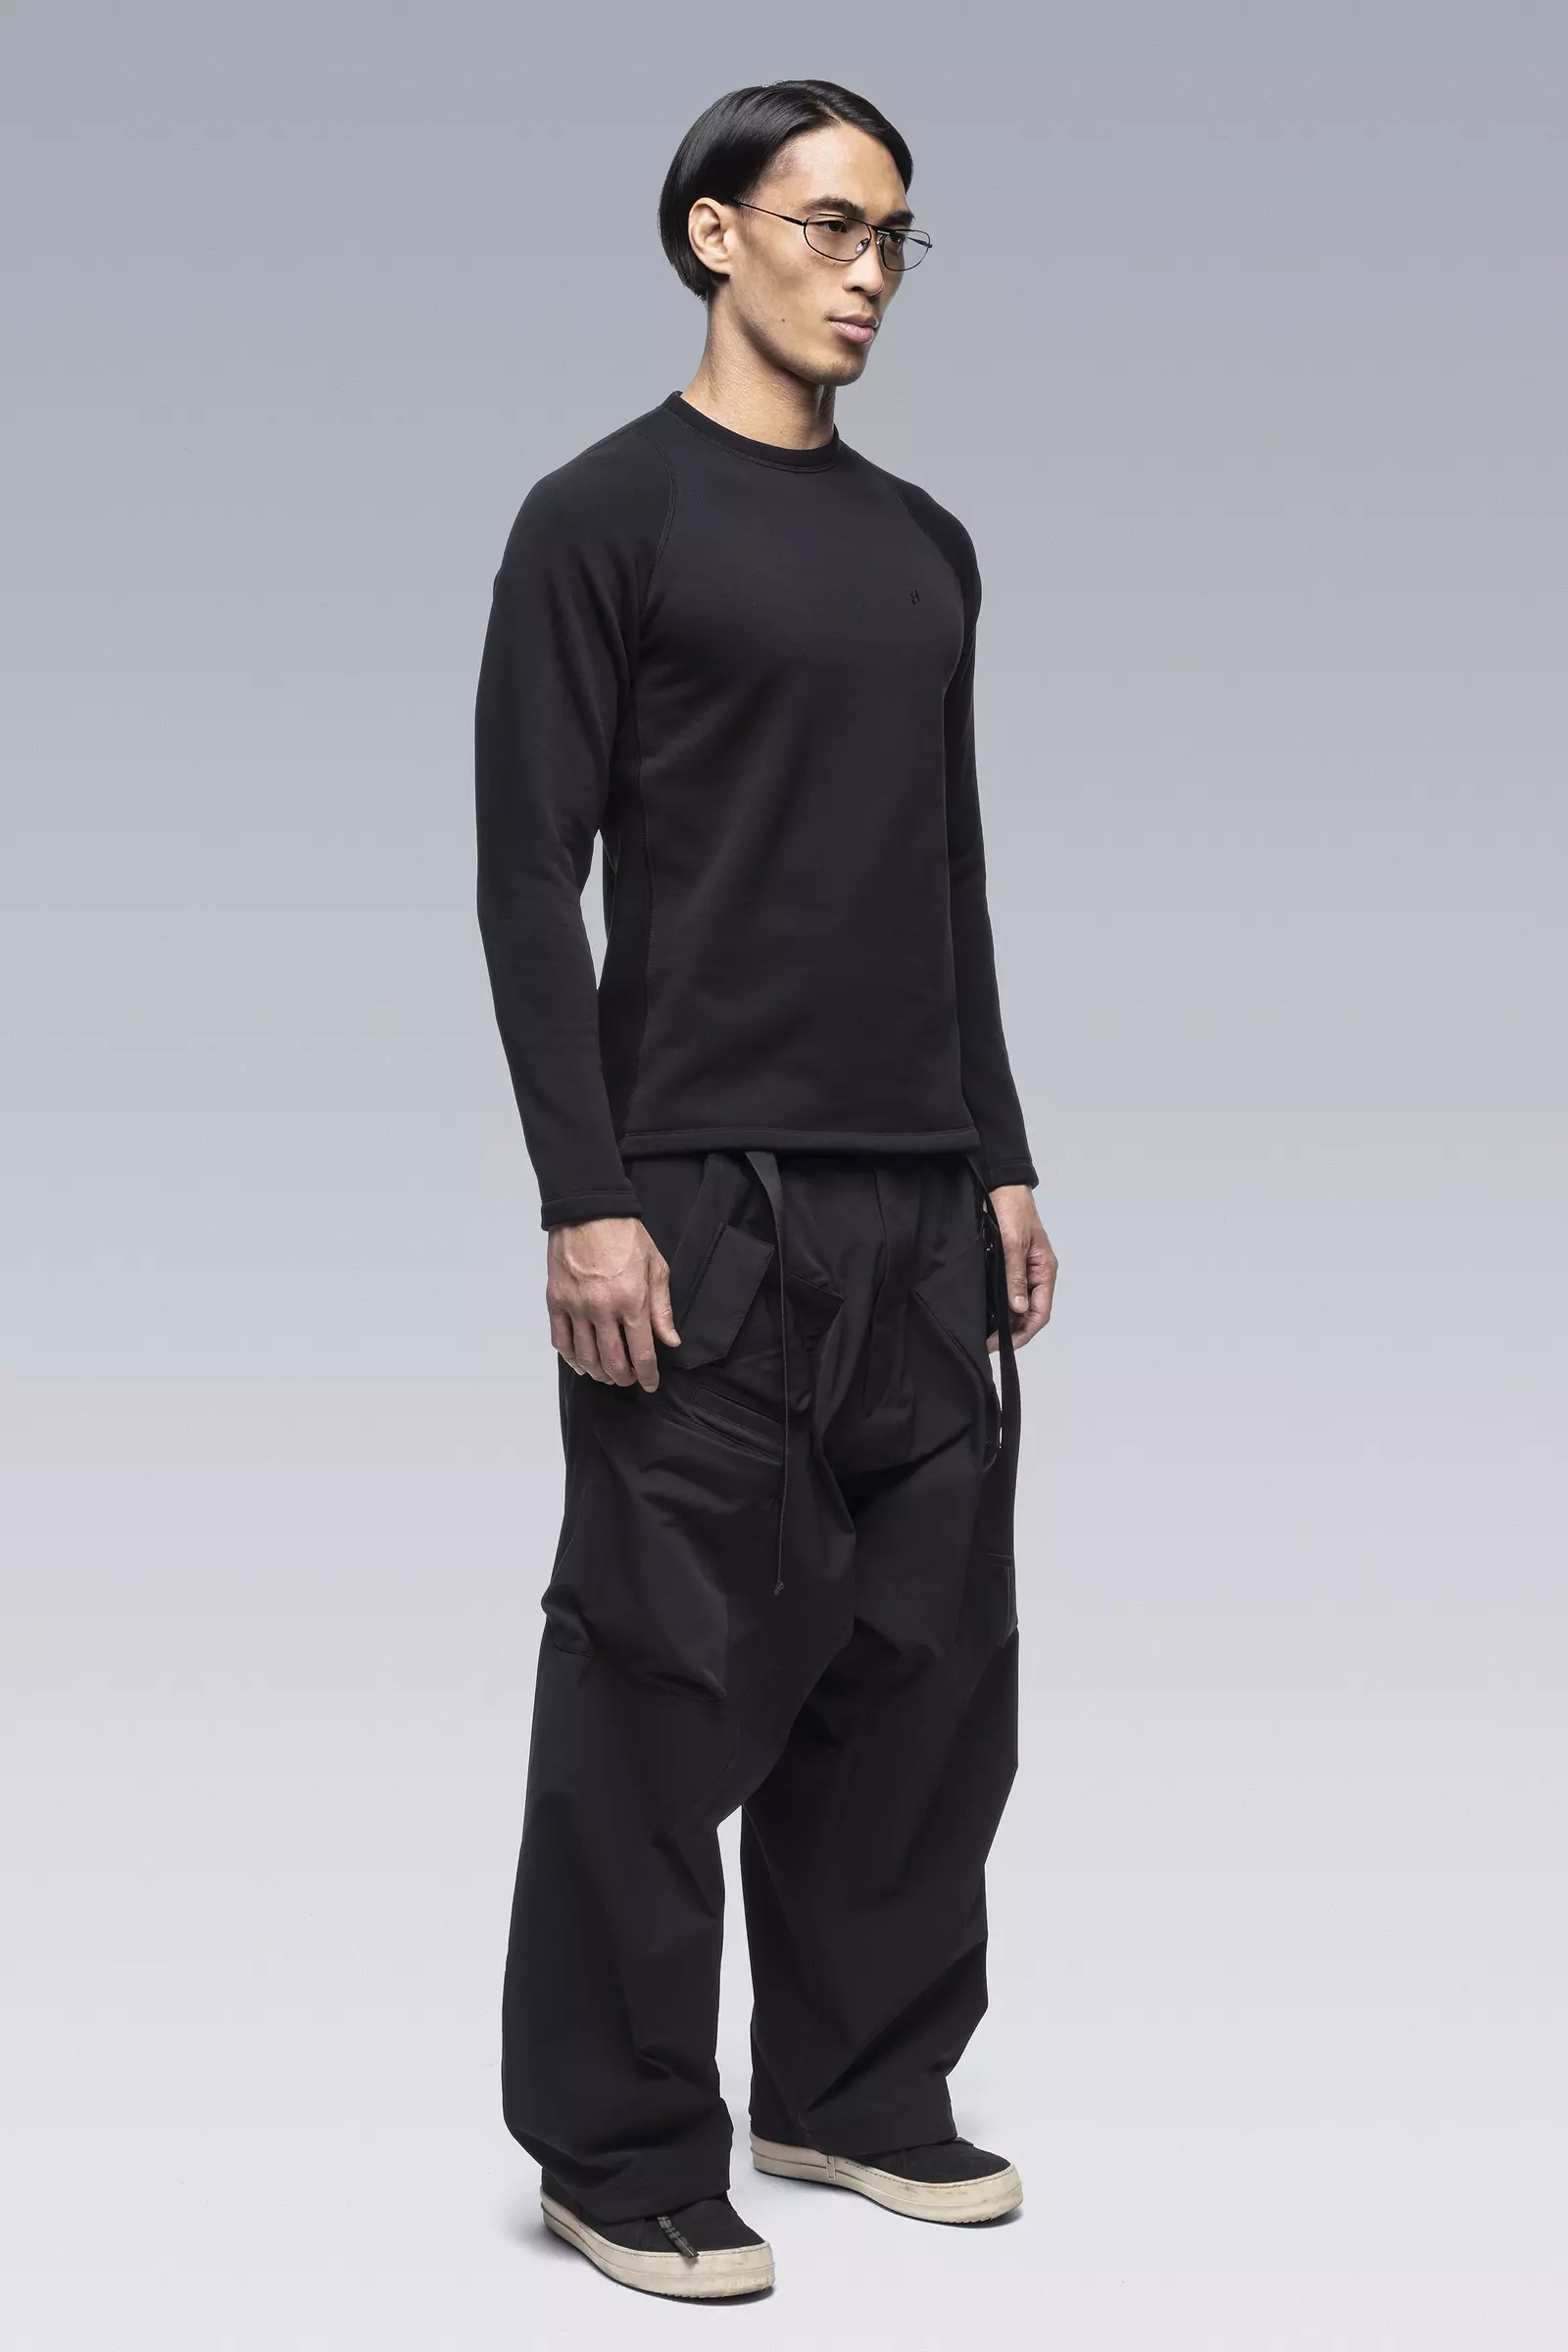 S27-PS Powerstretch® Longsleeve Shirt Black - 2